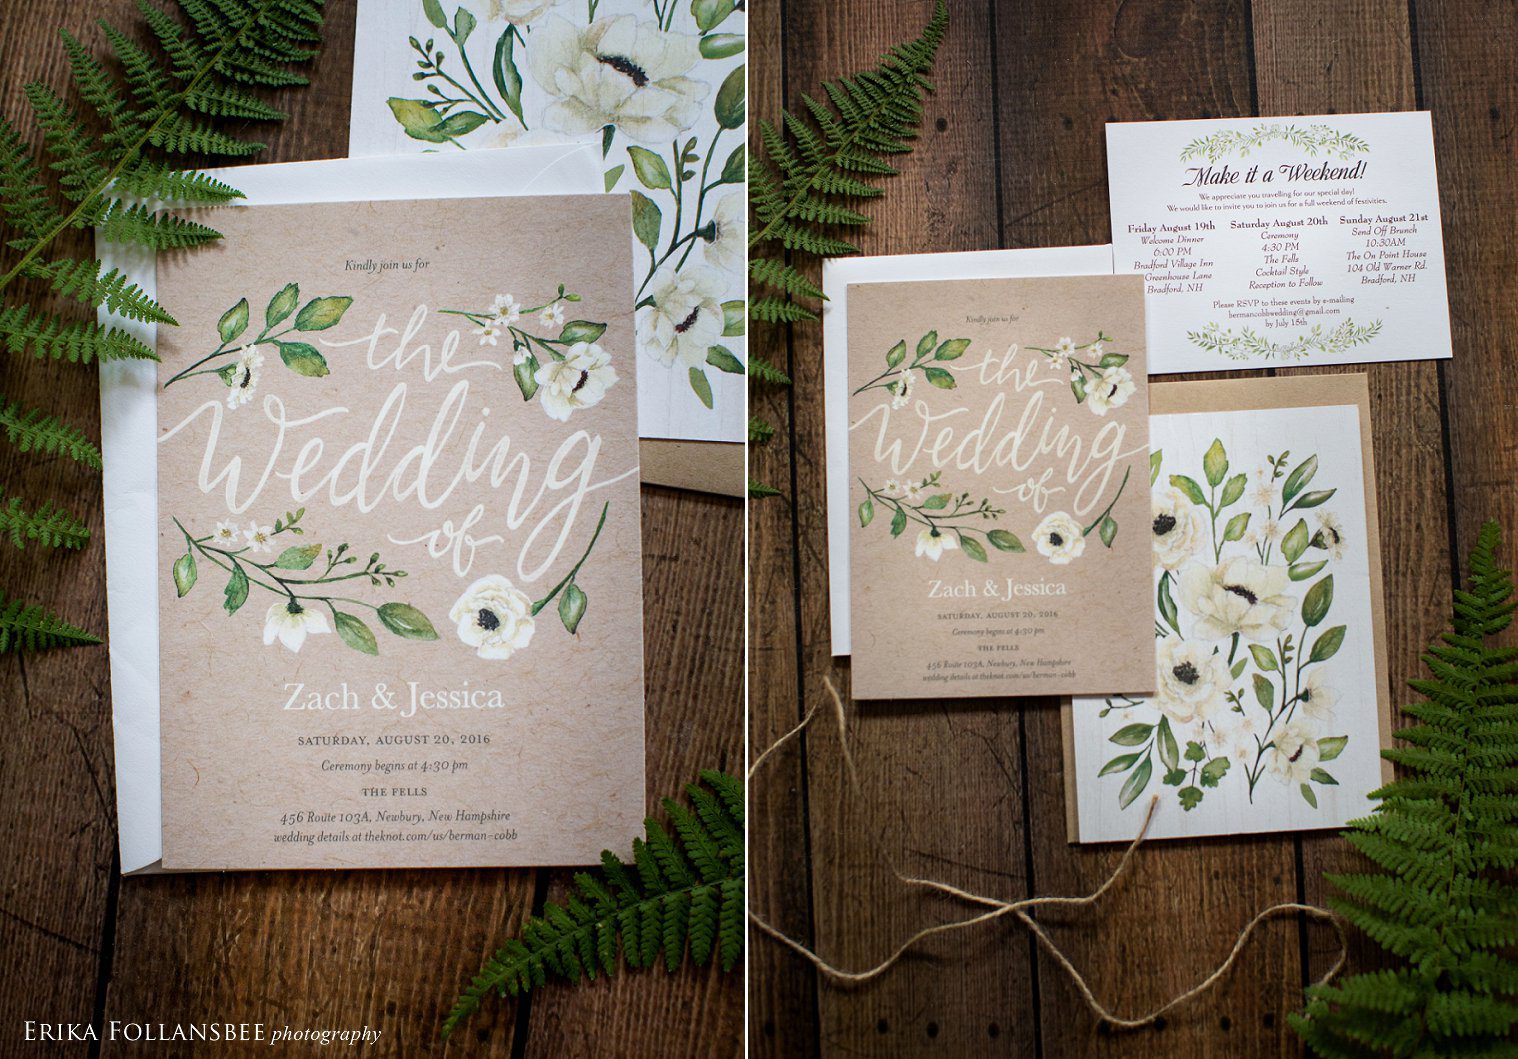 Garden style rustic wedding invitations